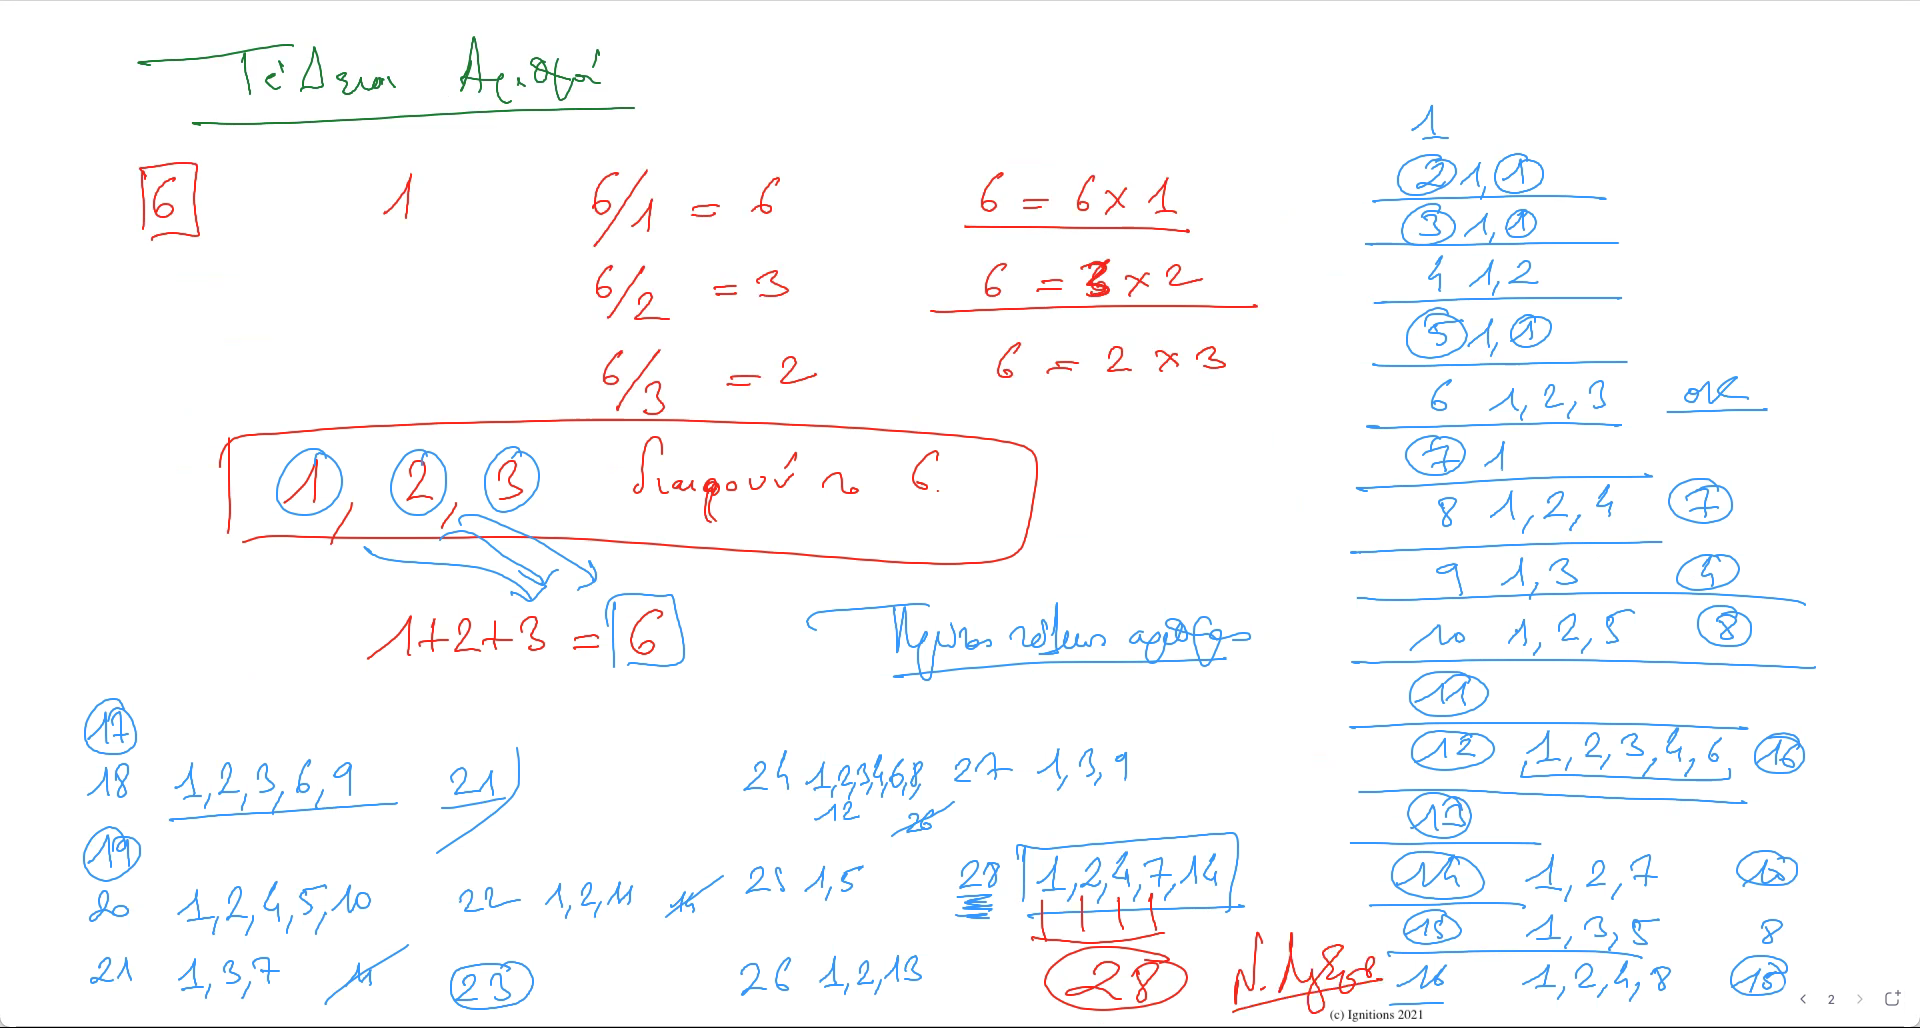 67134 - e-Μάθημα II: Κυκλικοί και Τέλειοι Αριθμοί. (Dessin)